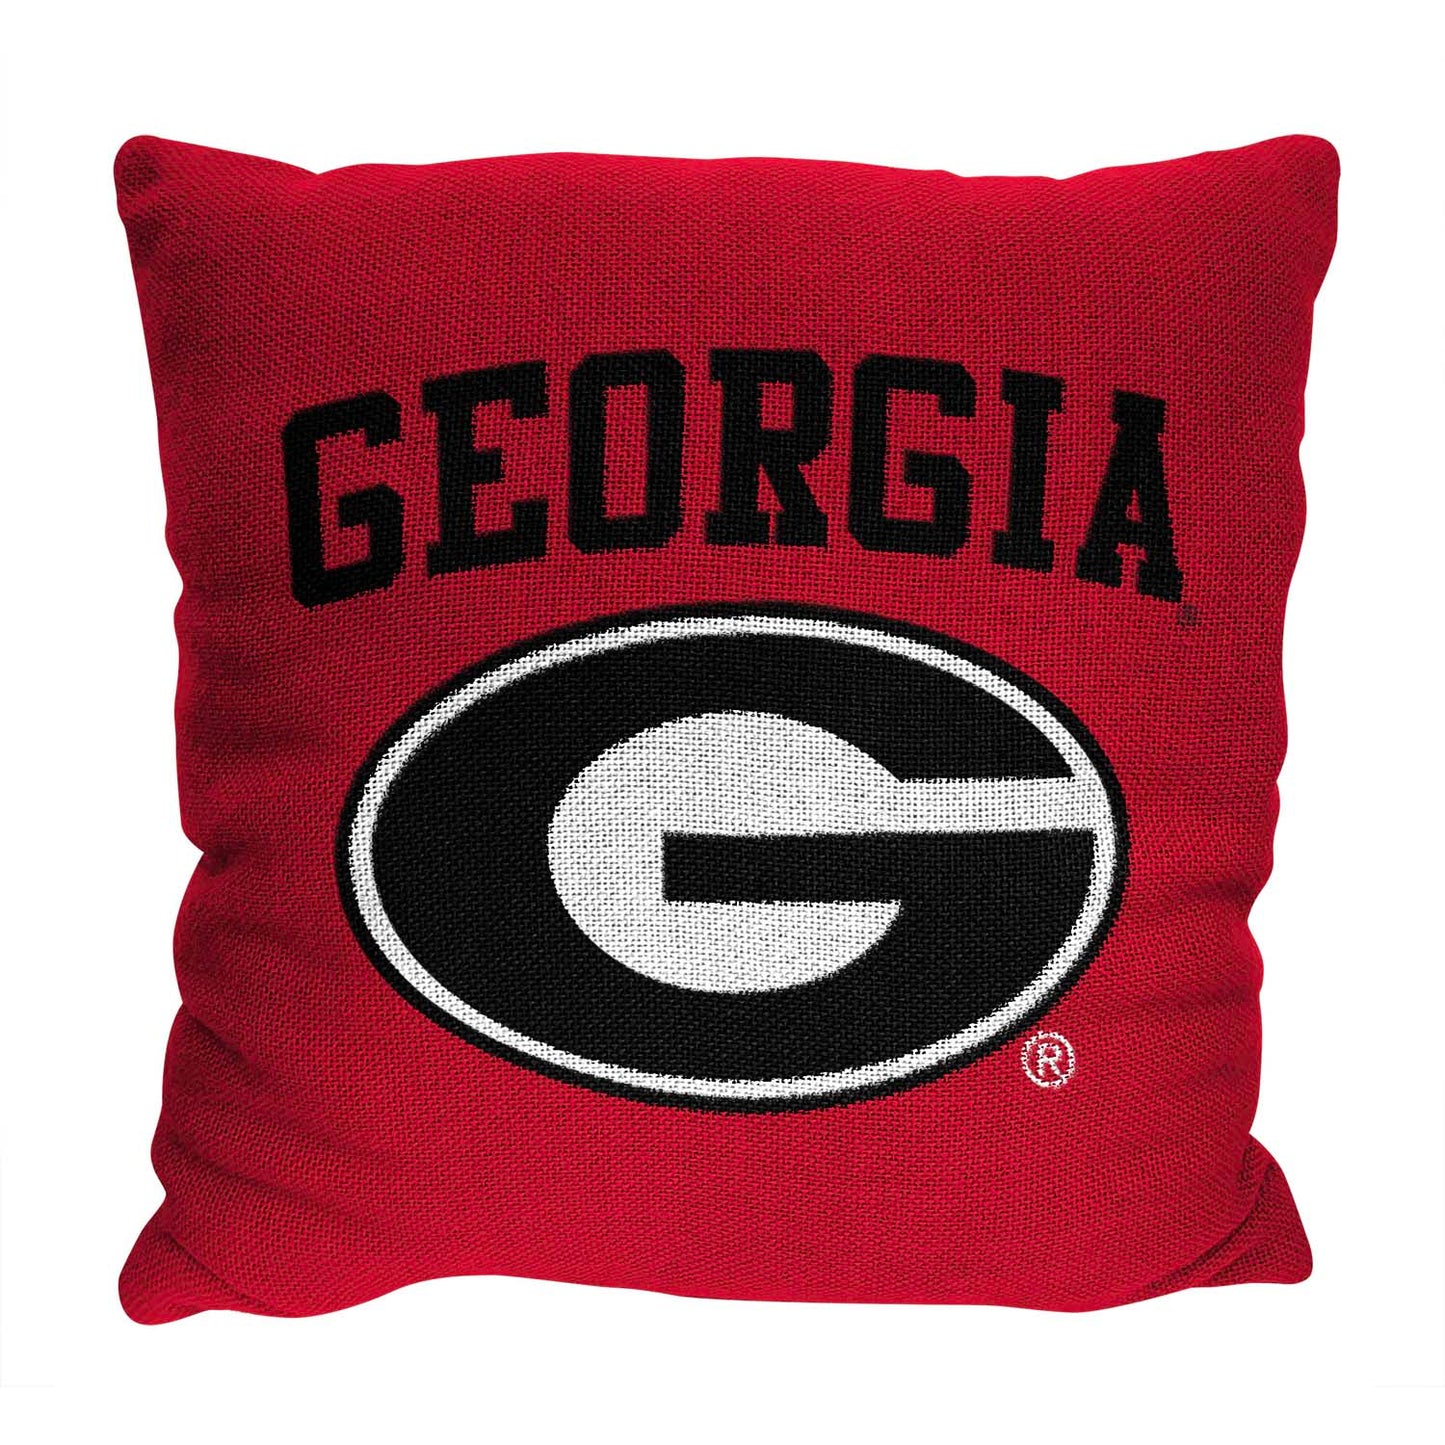 Georgia Bulldogs NCAA Decorative Pillow - Red